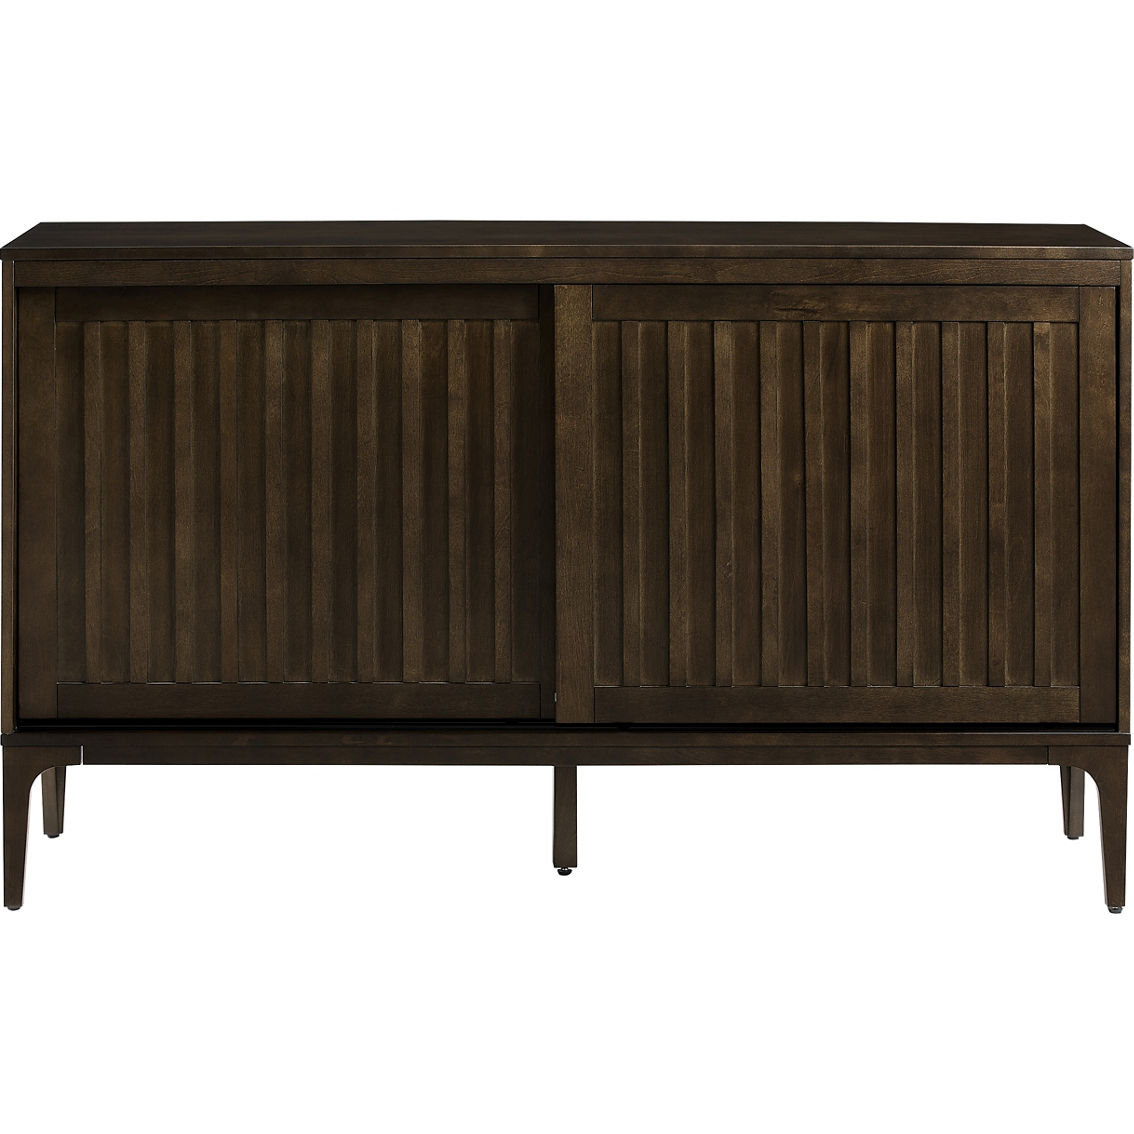 Crosley Furniture Asher Sideboard - Image 4 of 7